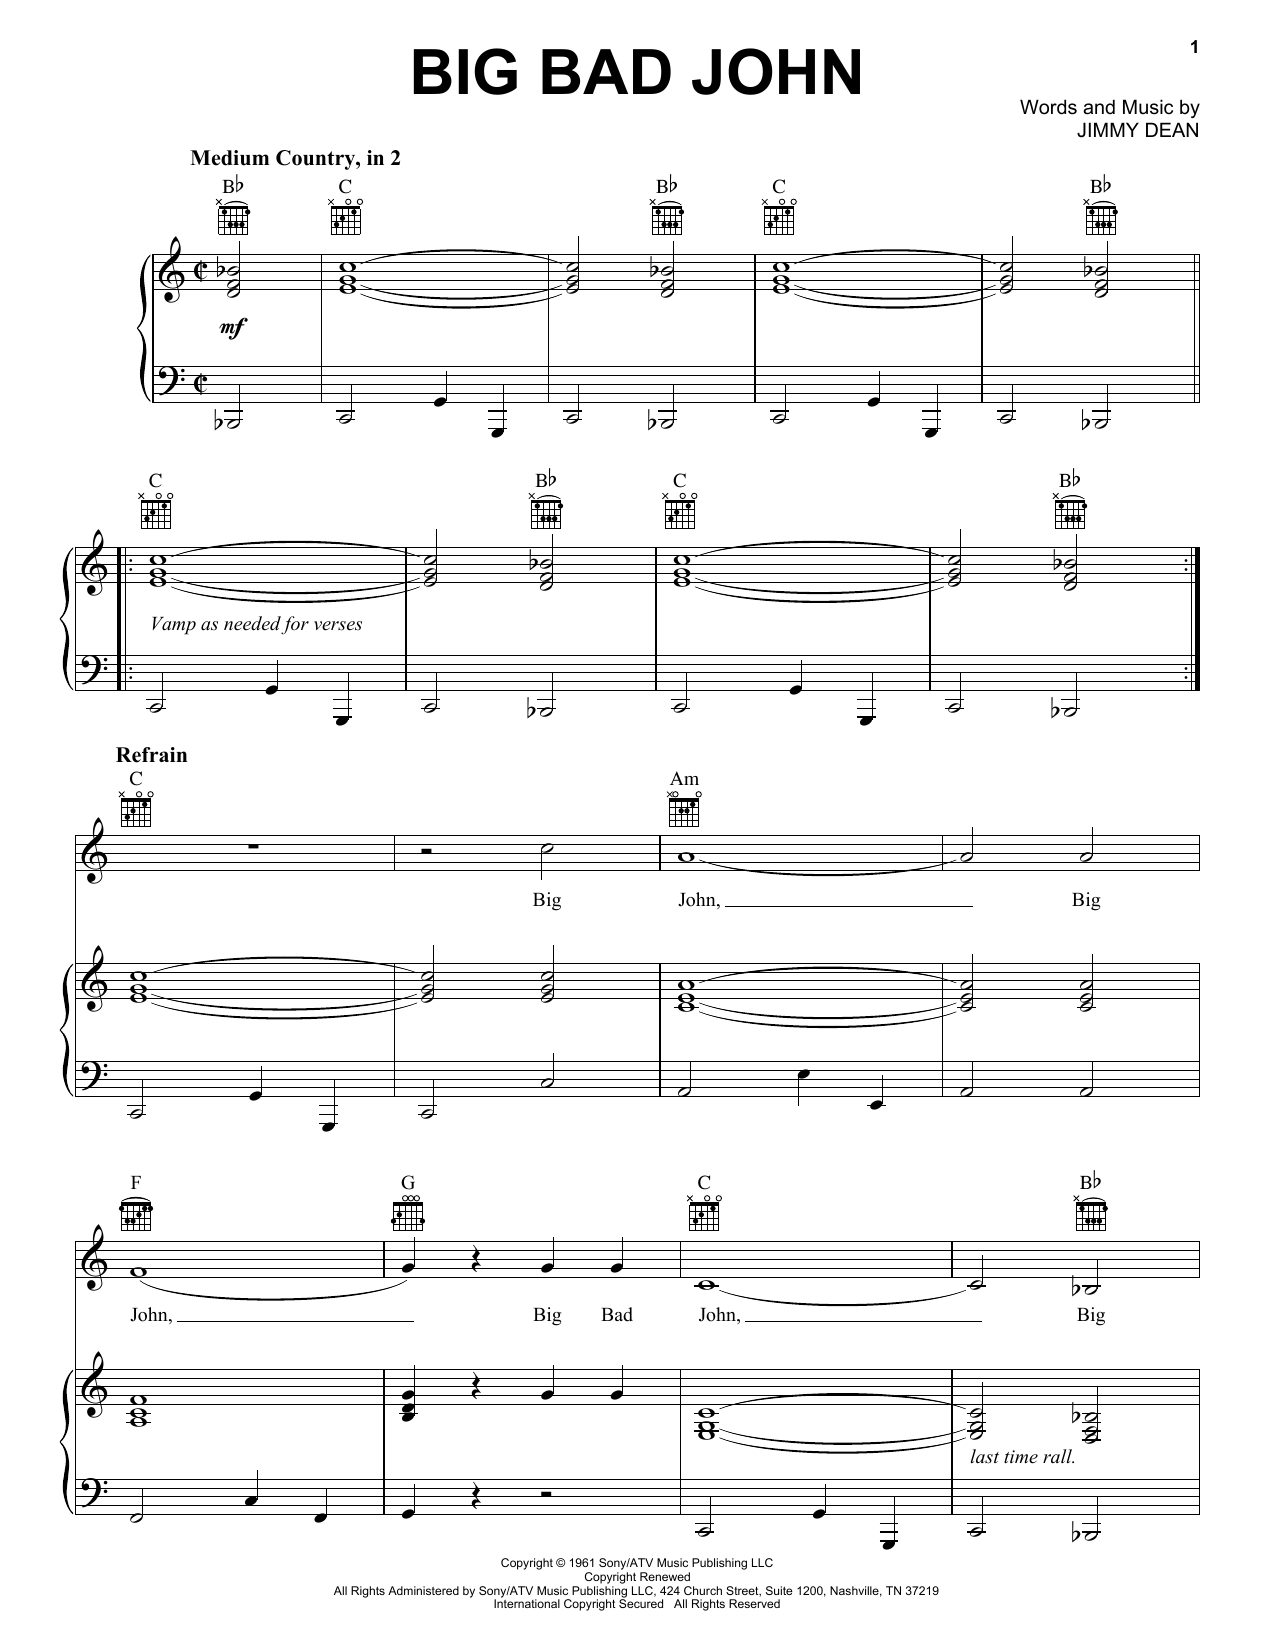 Jimmy Dean Big Bad John Sheet Music Notes & Chords for Easy Guitar Tab - Download or Print PDF